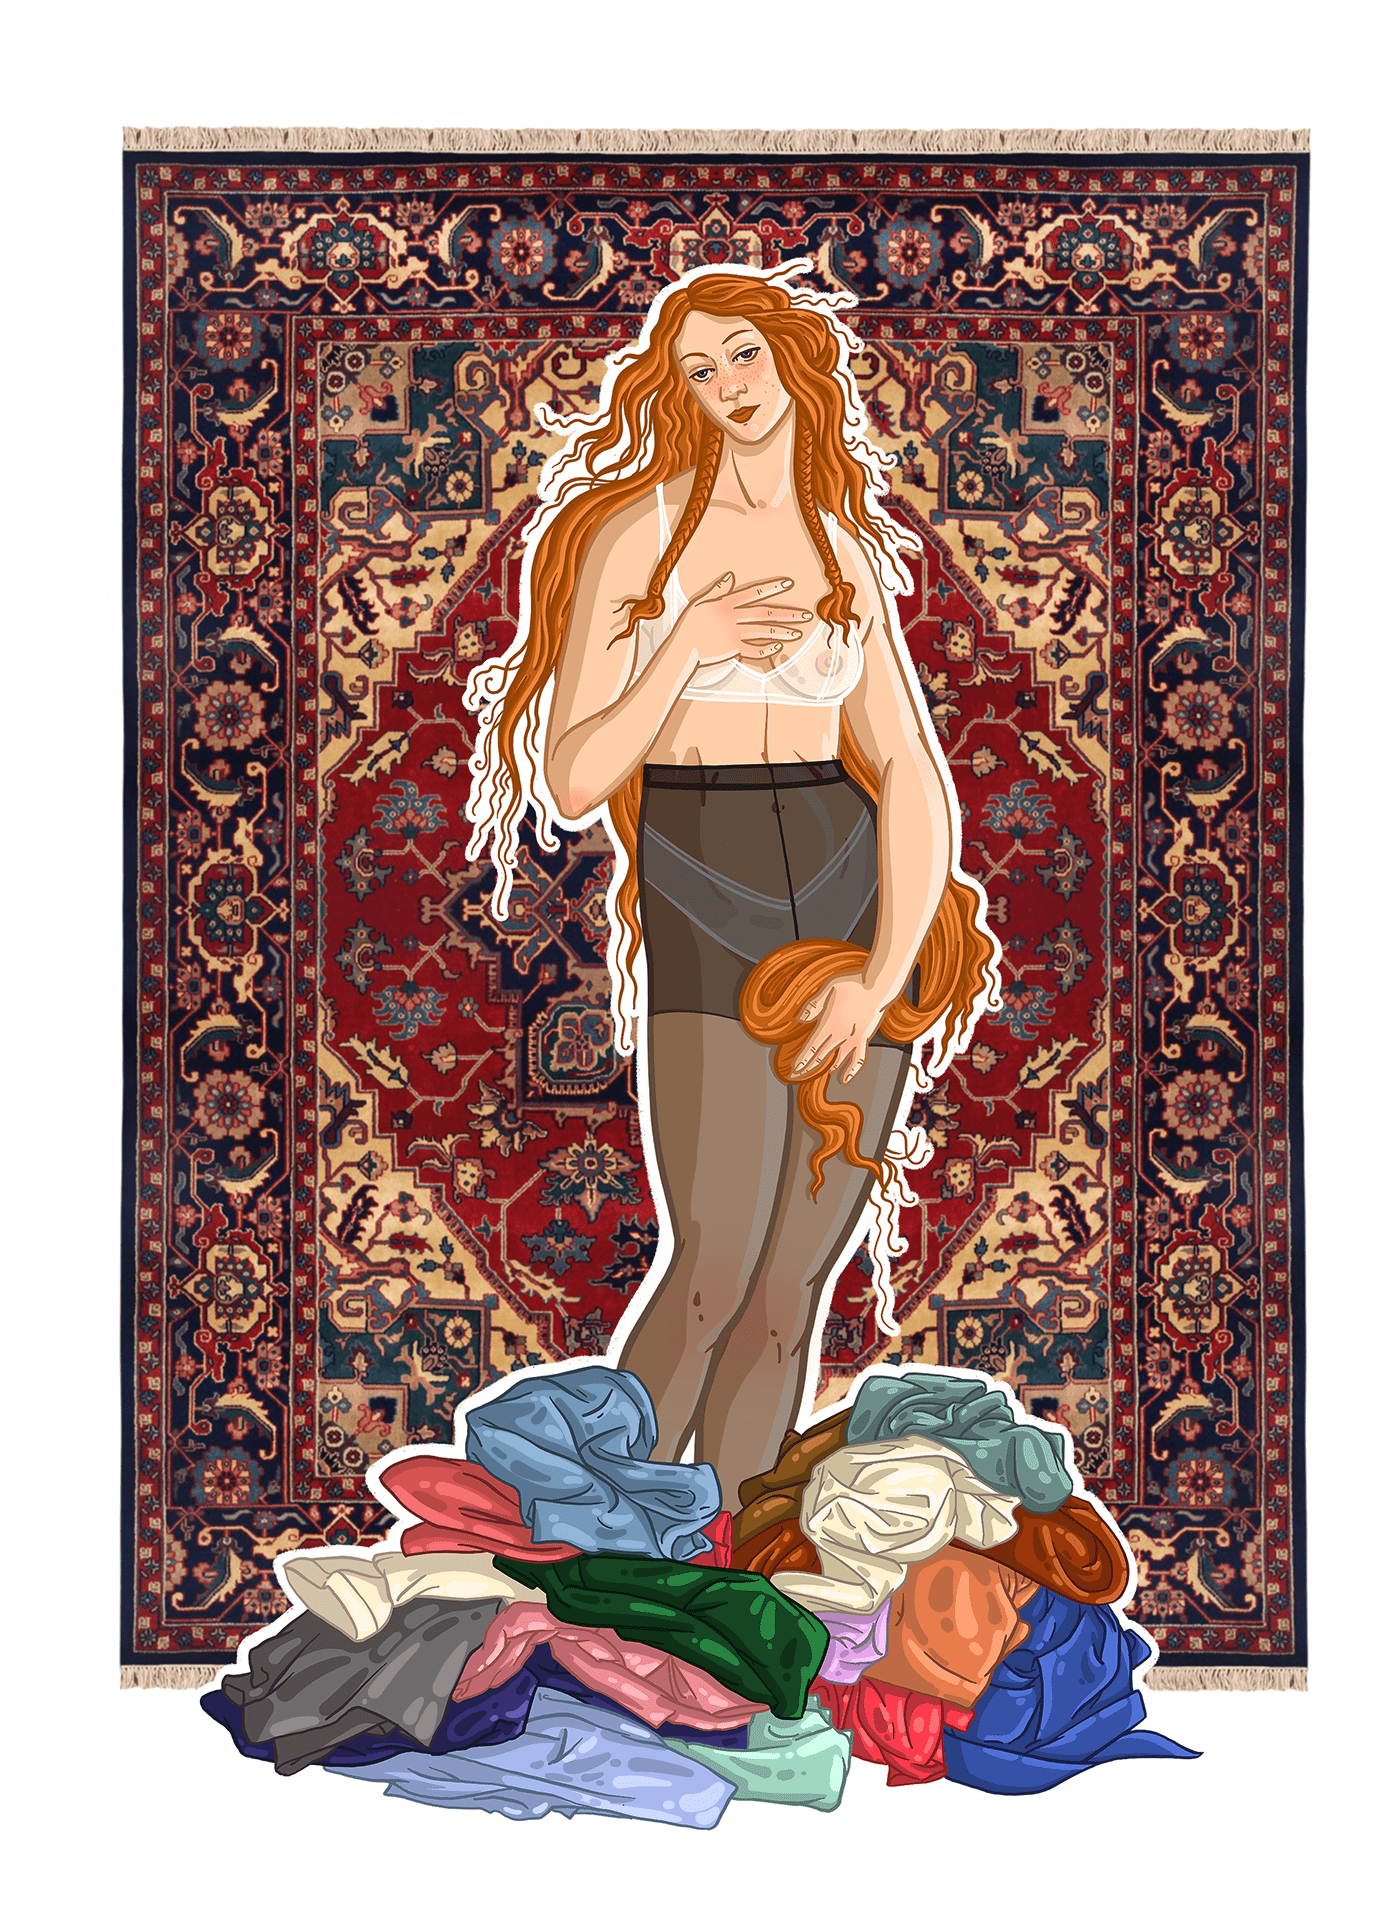 venus carpet woman comic birth beauty goddes ILLUSTRATION  art contemprary